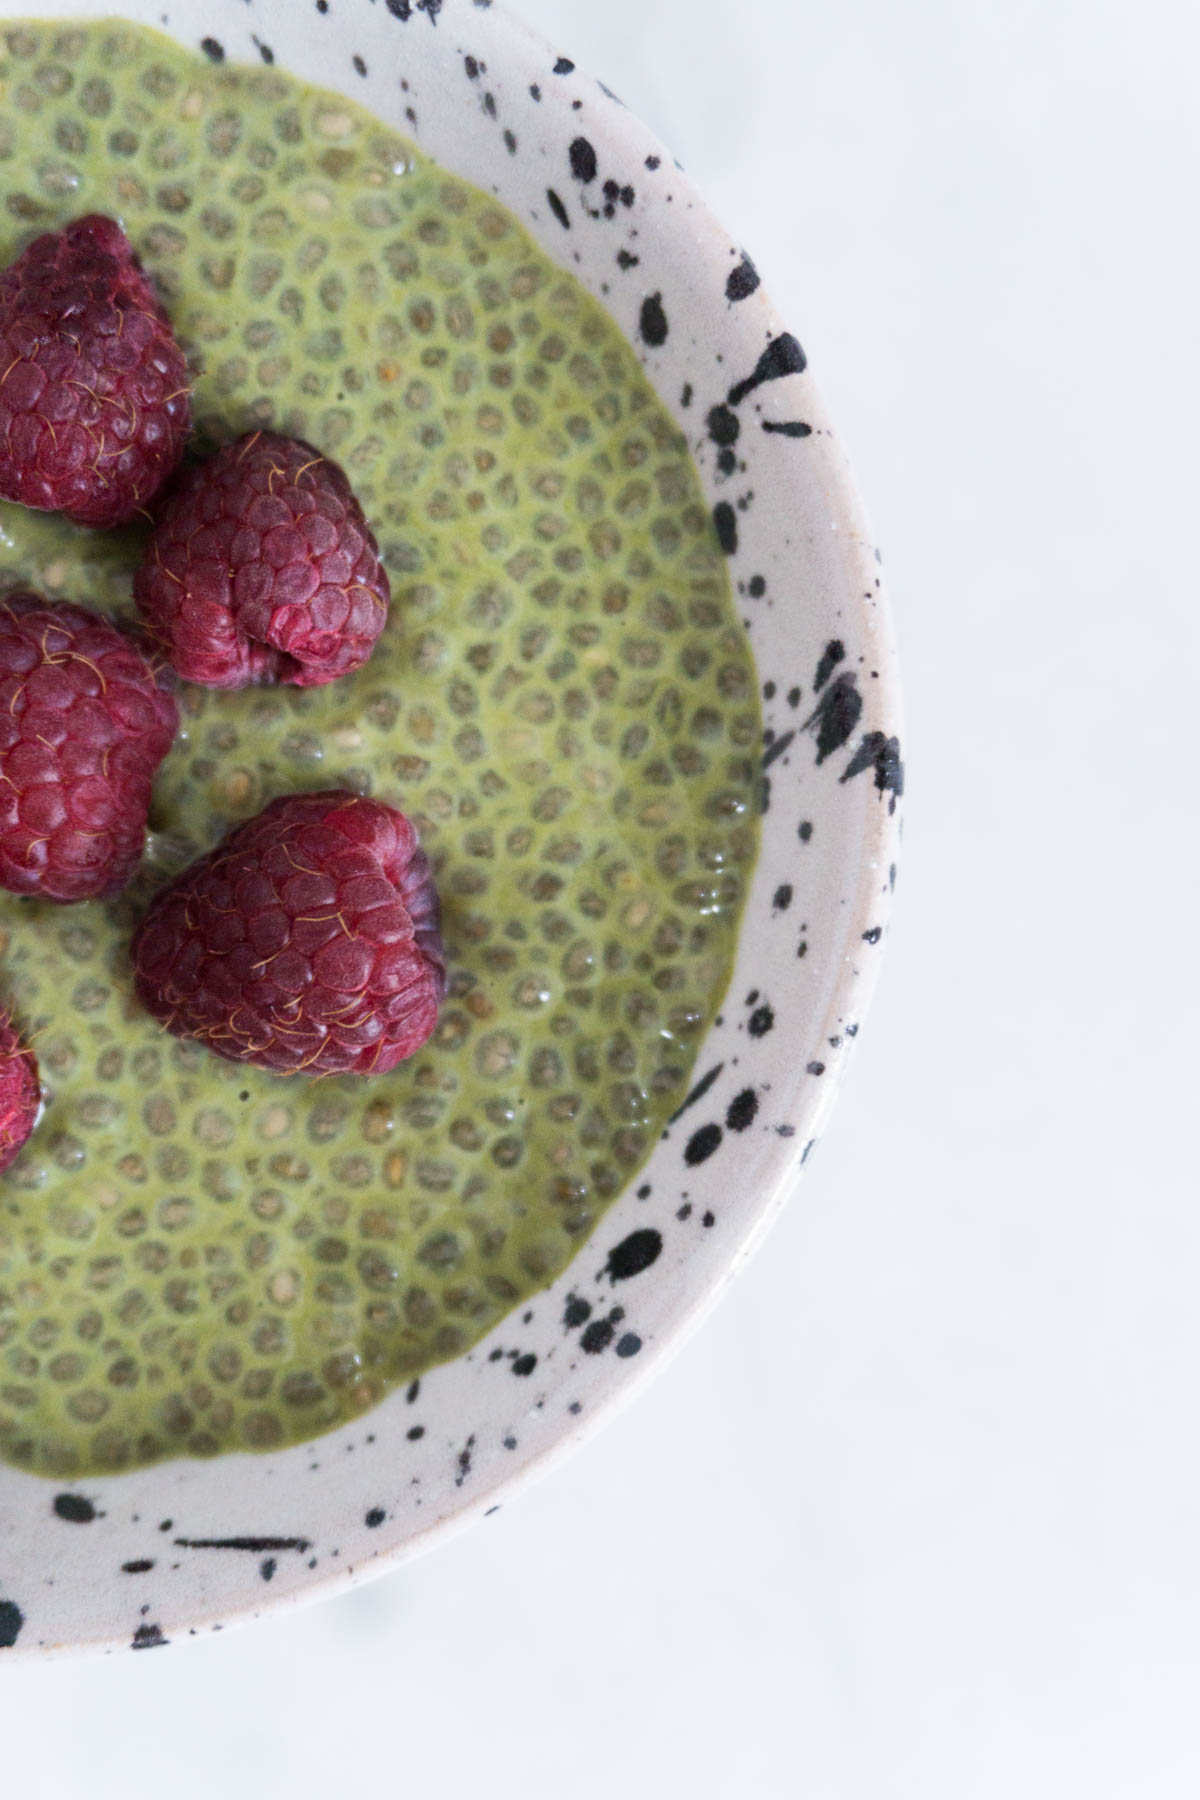 Matcha Chia Pudding Recipe / Healthy Vegan Breakfast / RG Daily Blog